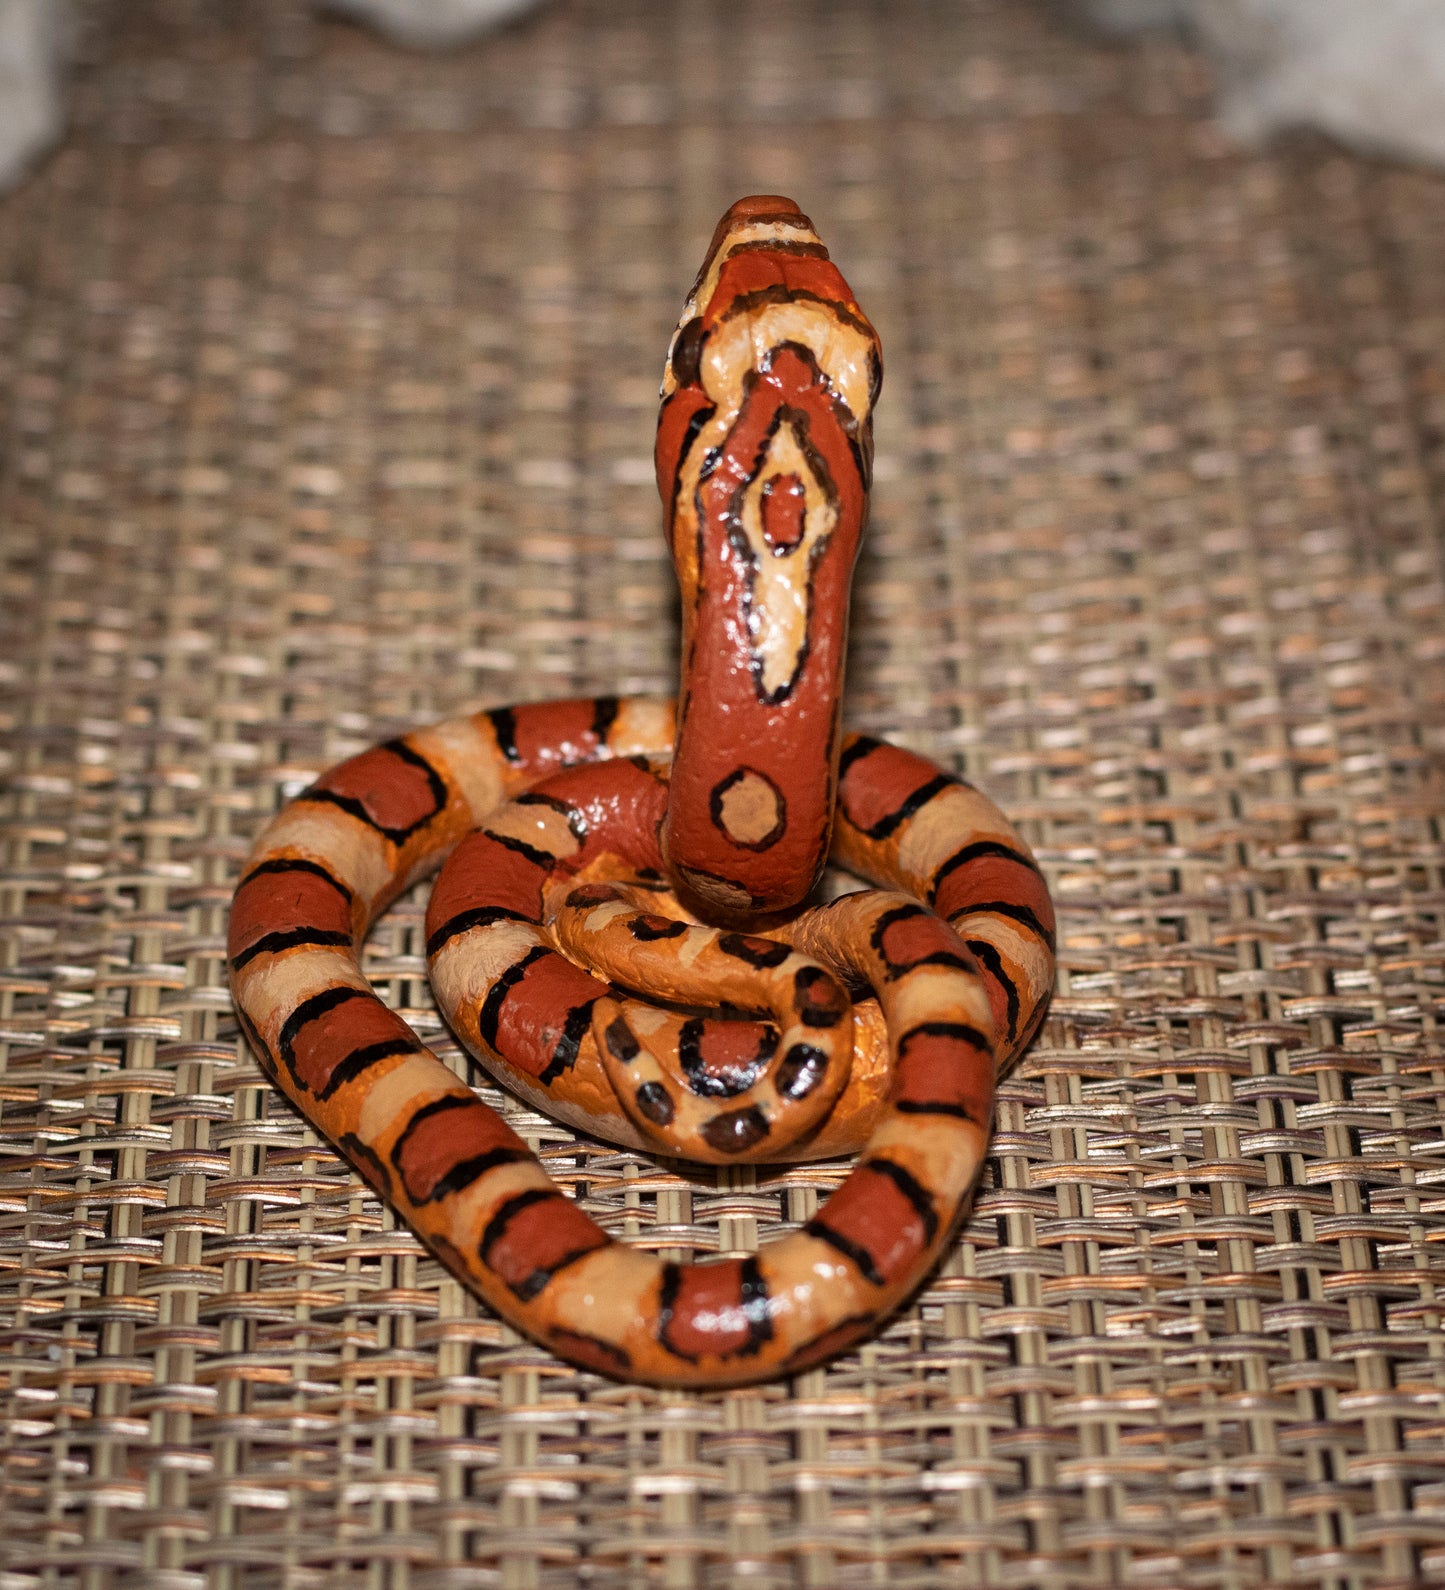 Corn Snake - Ring Holder - Handmade Polymer Clay Figurine